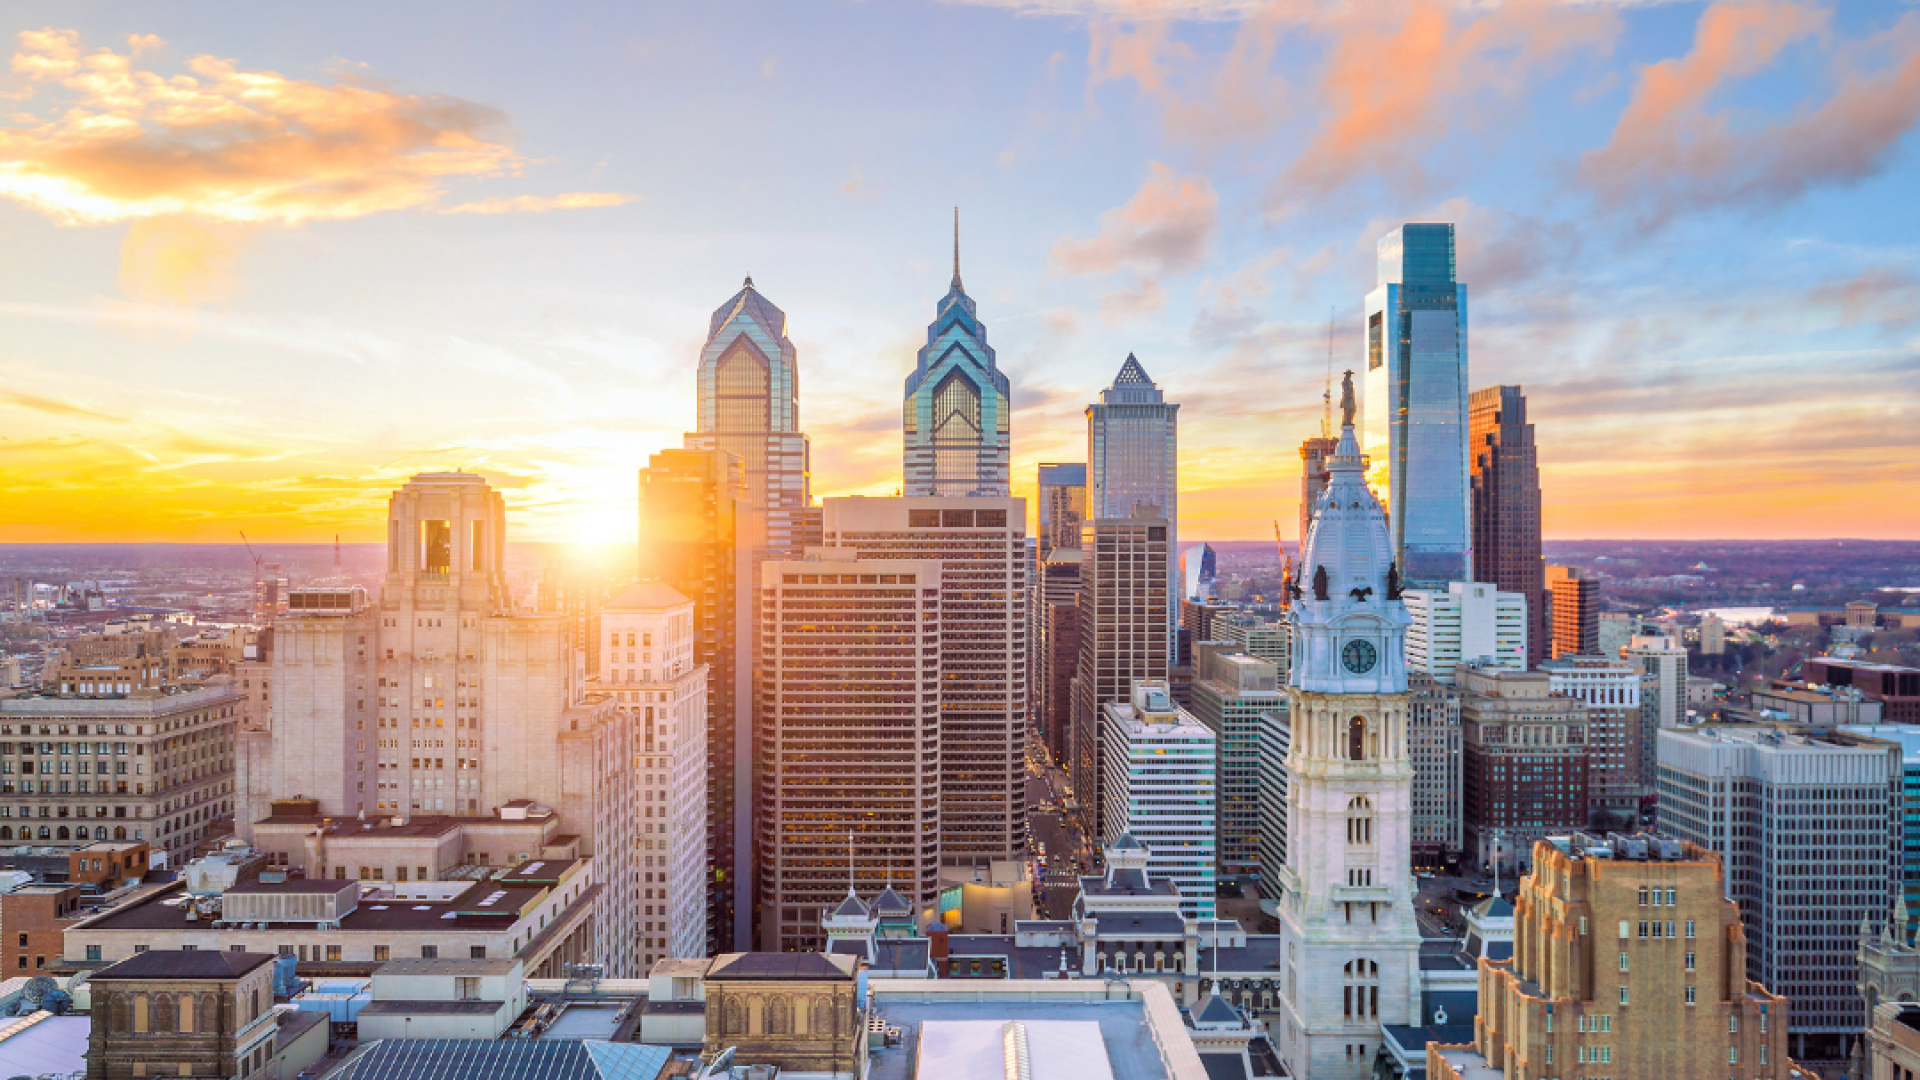 The skyline of Philadelphia at sunset